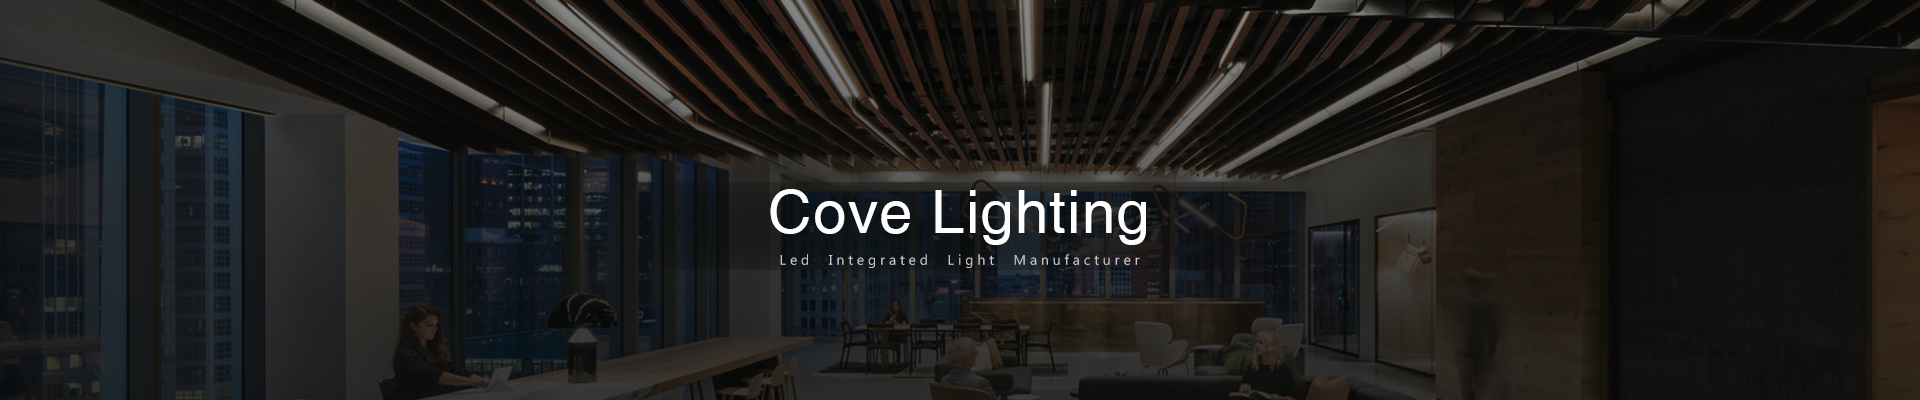 Cove Lighting